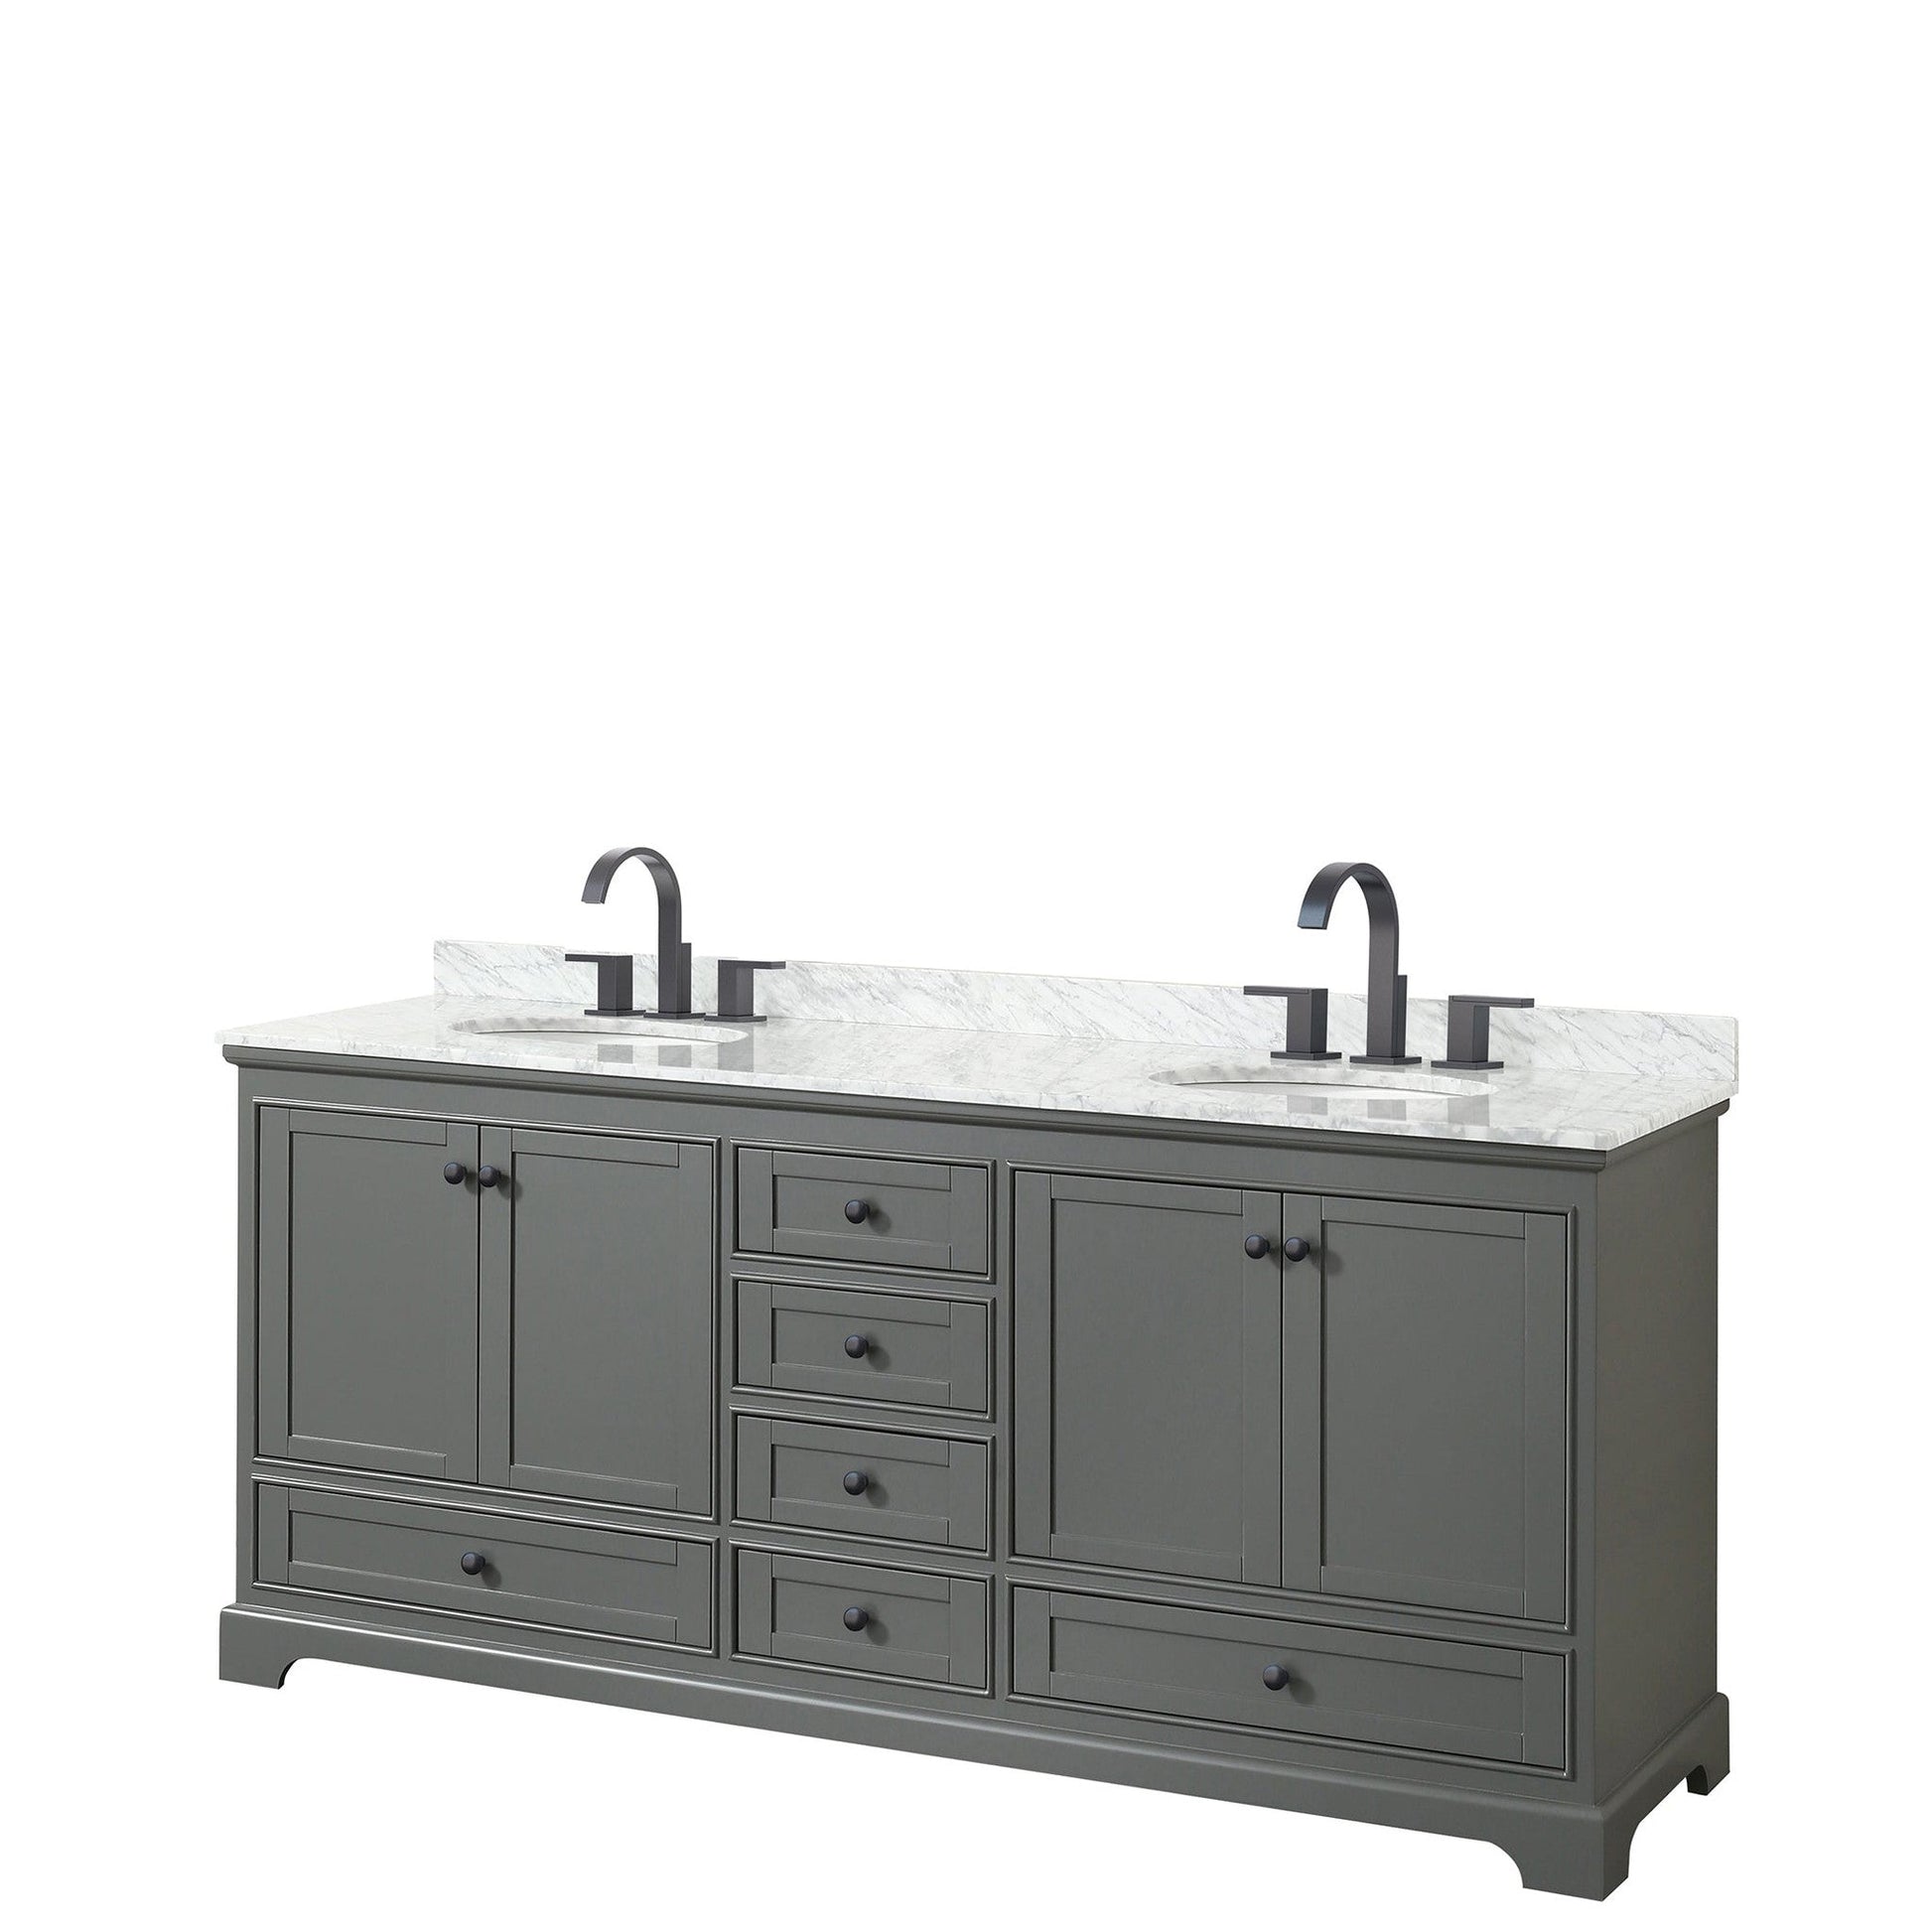 Deborah 80" Double Bathroom Vanity in Dark Gray, White Carrara Marble Countertop, Undermount Oval Sinks, Matte Black Trim